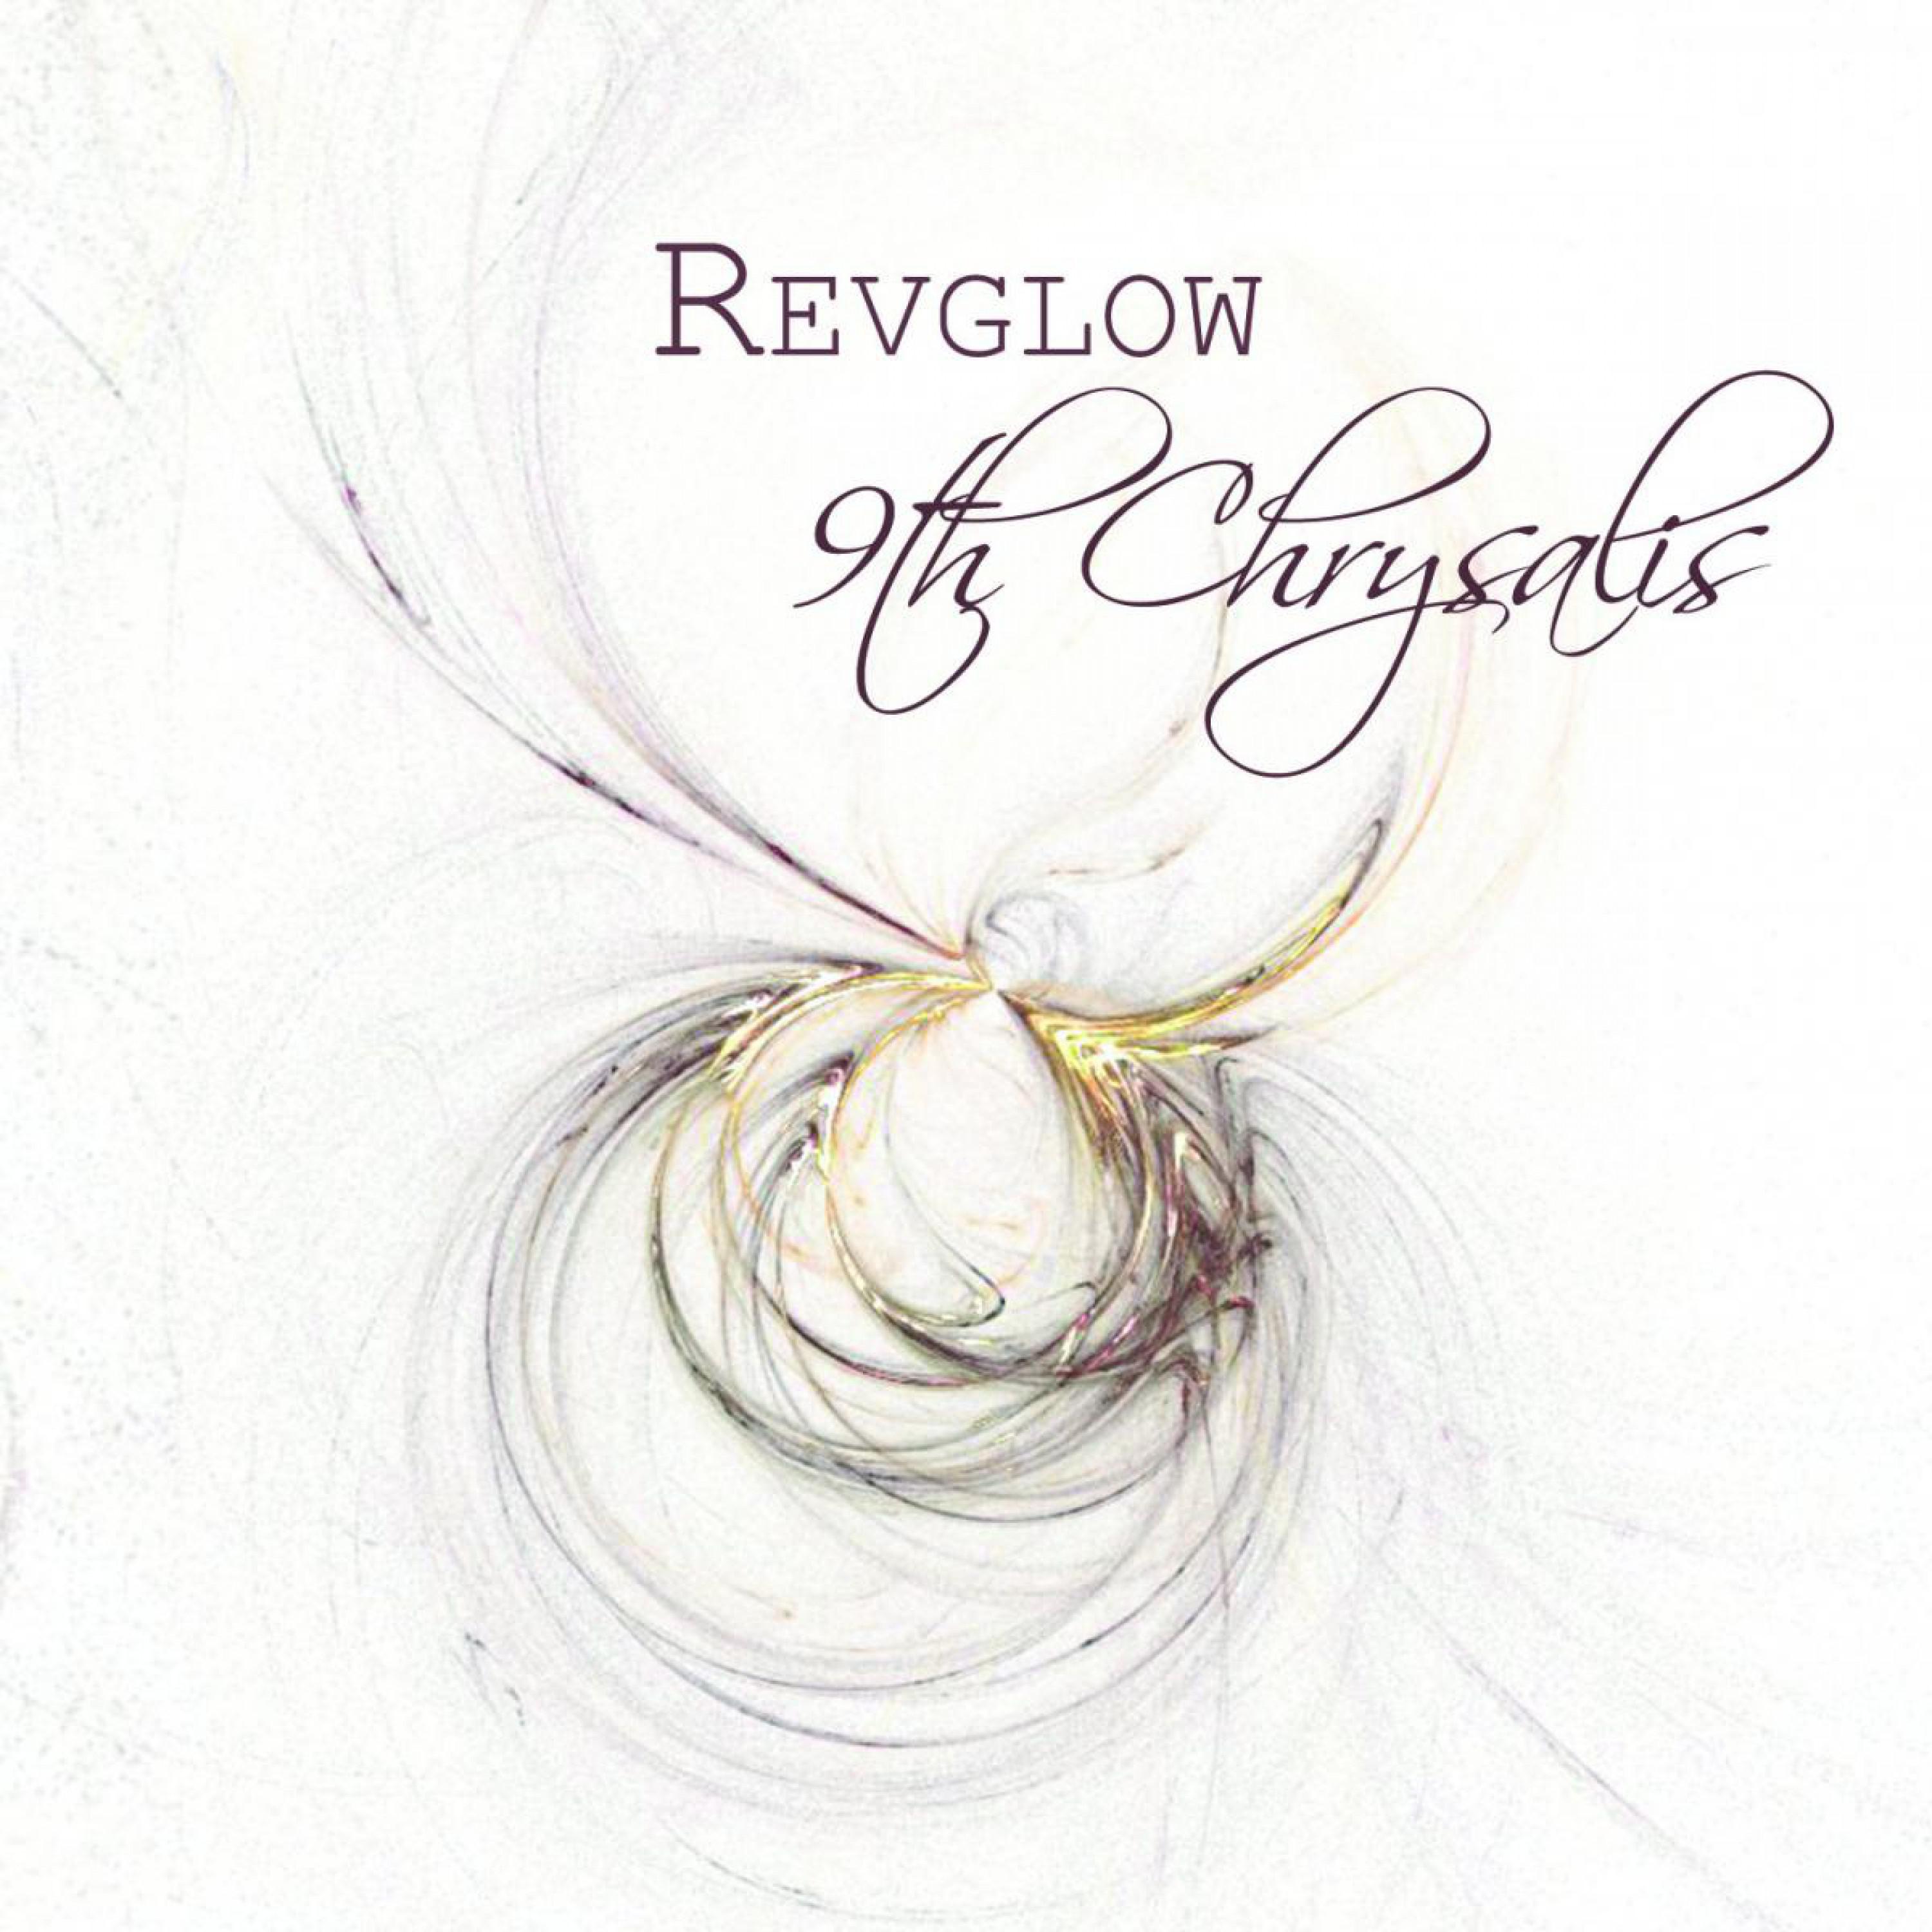 Revglow - Veils